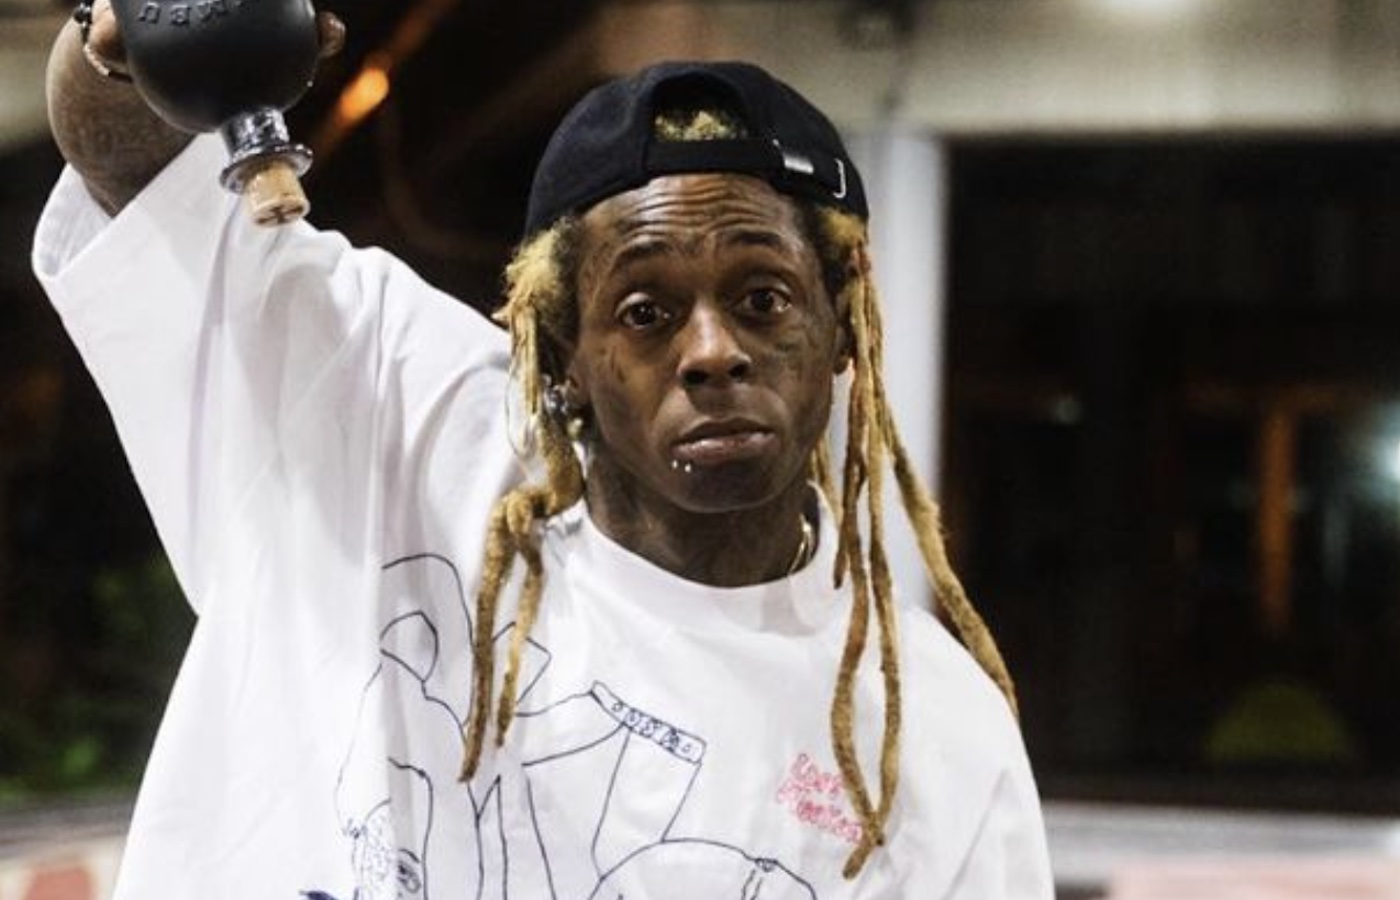 American rapper Lil Wayne